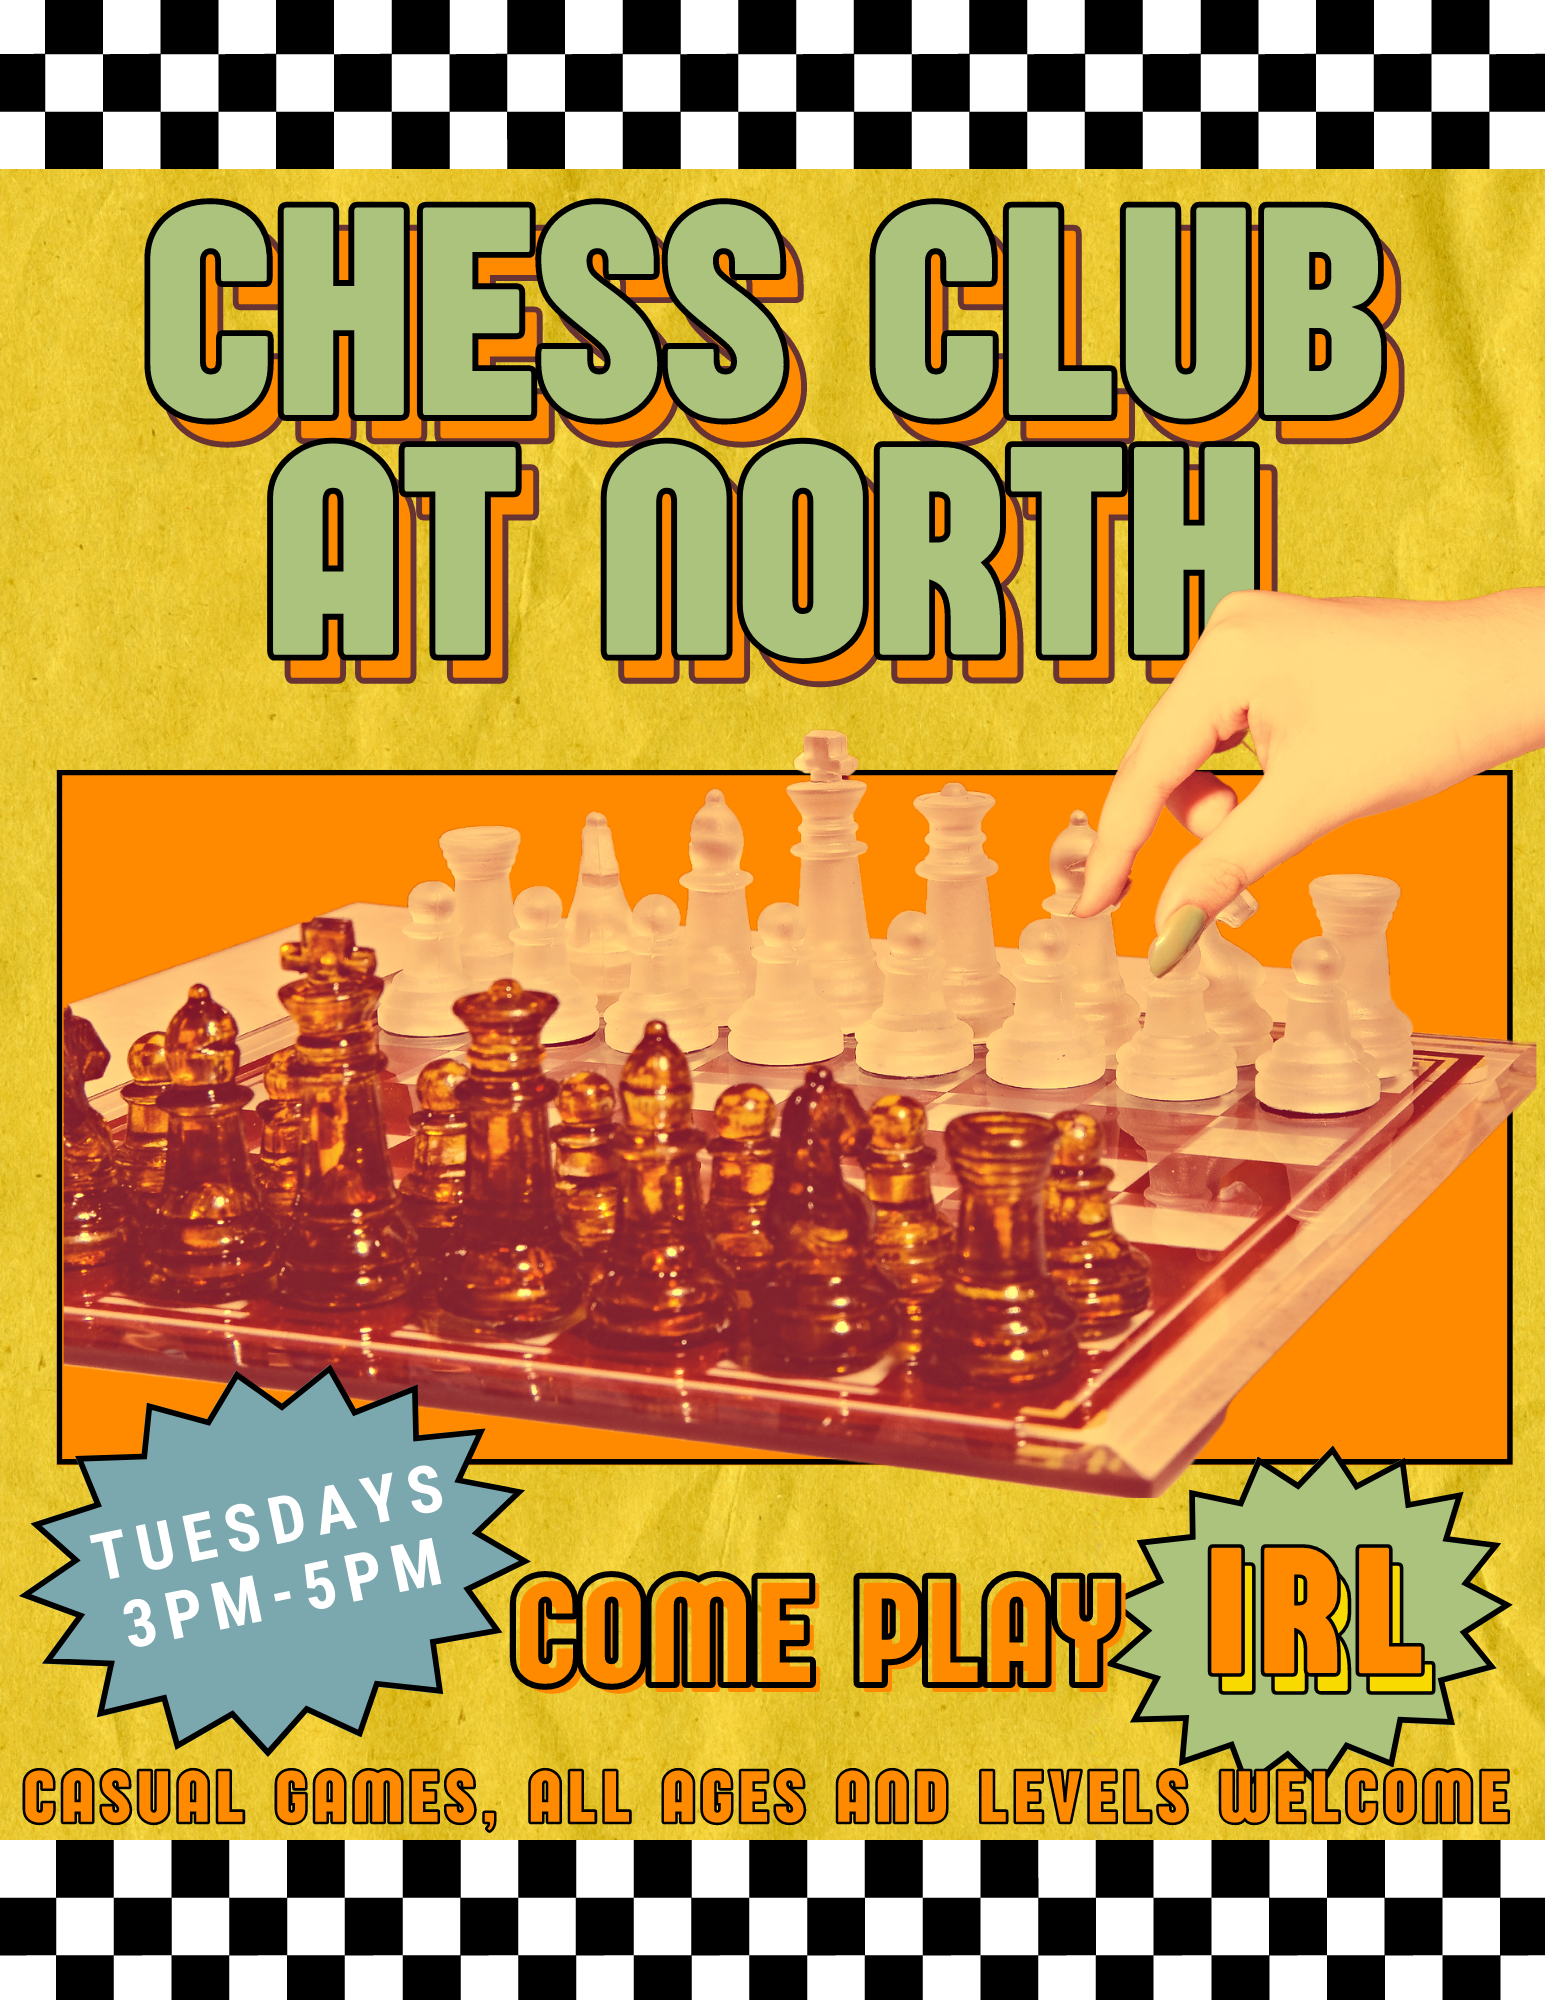 Chess Club / Chess Club